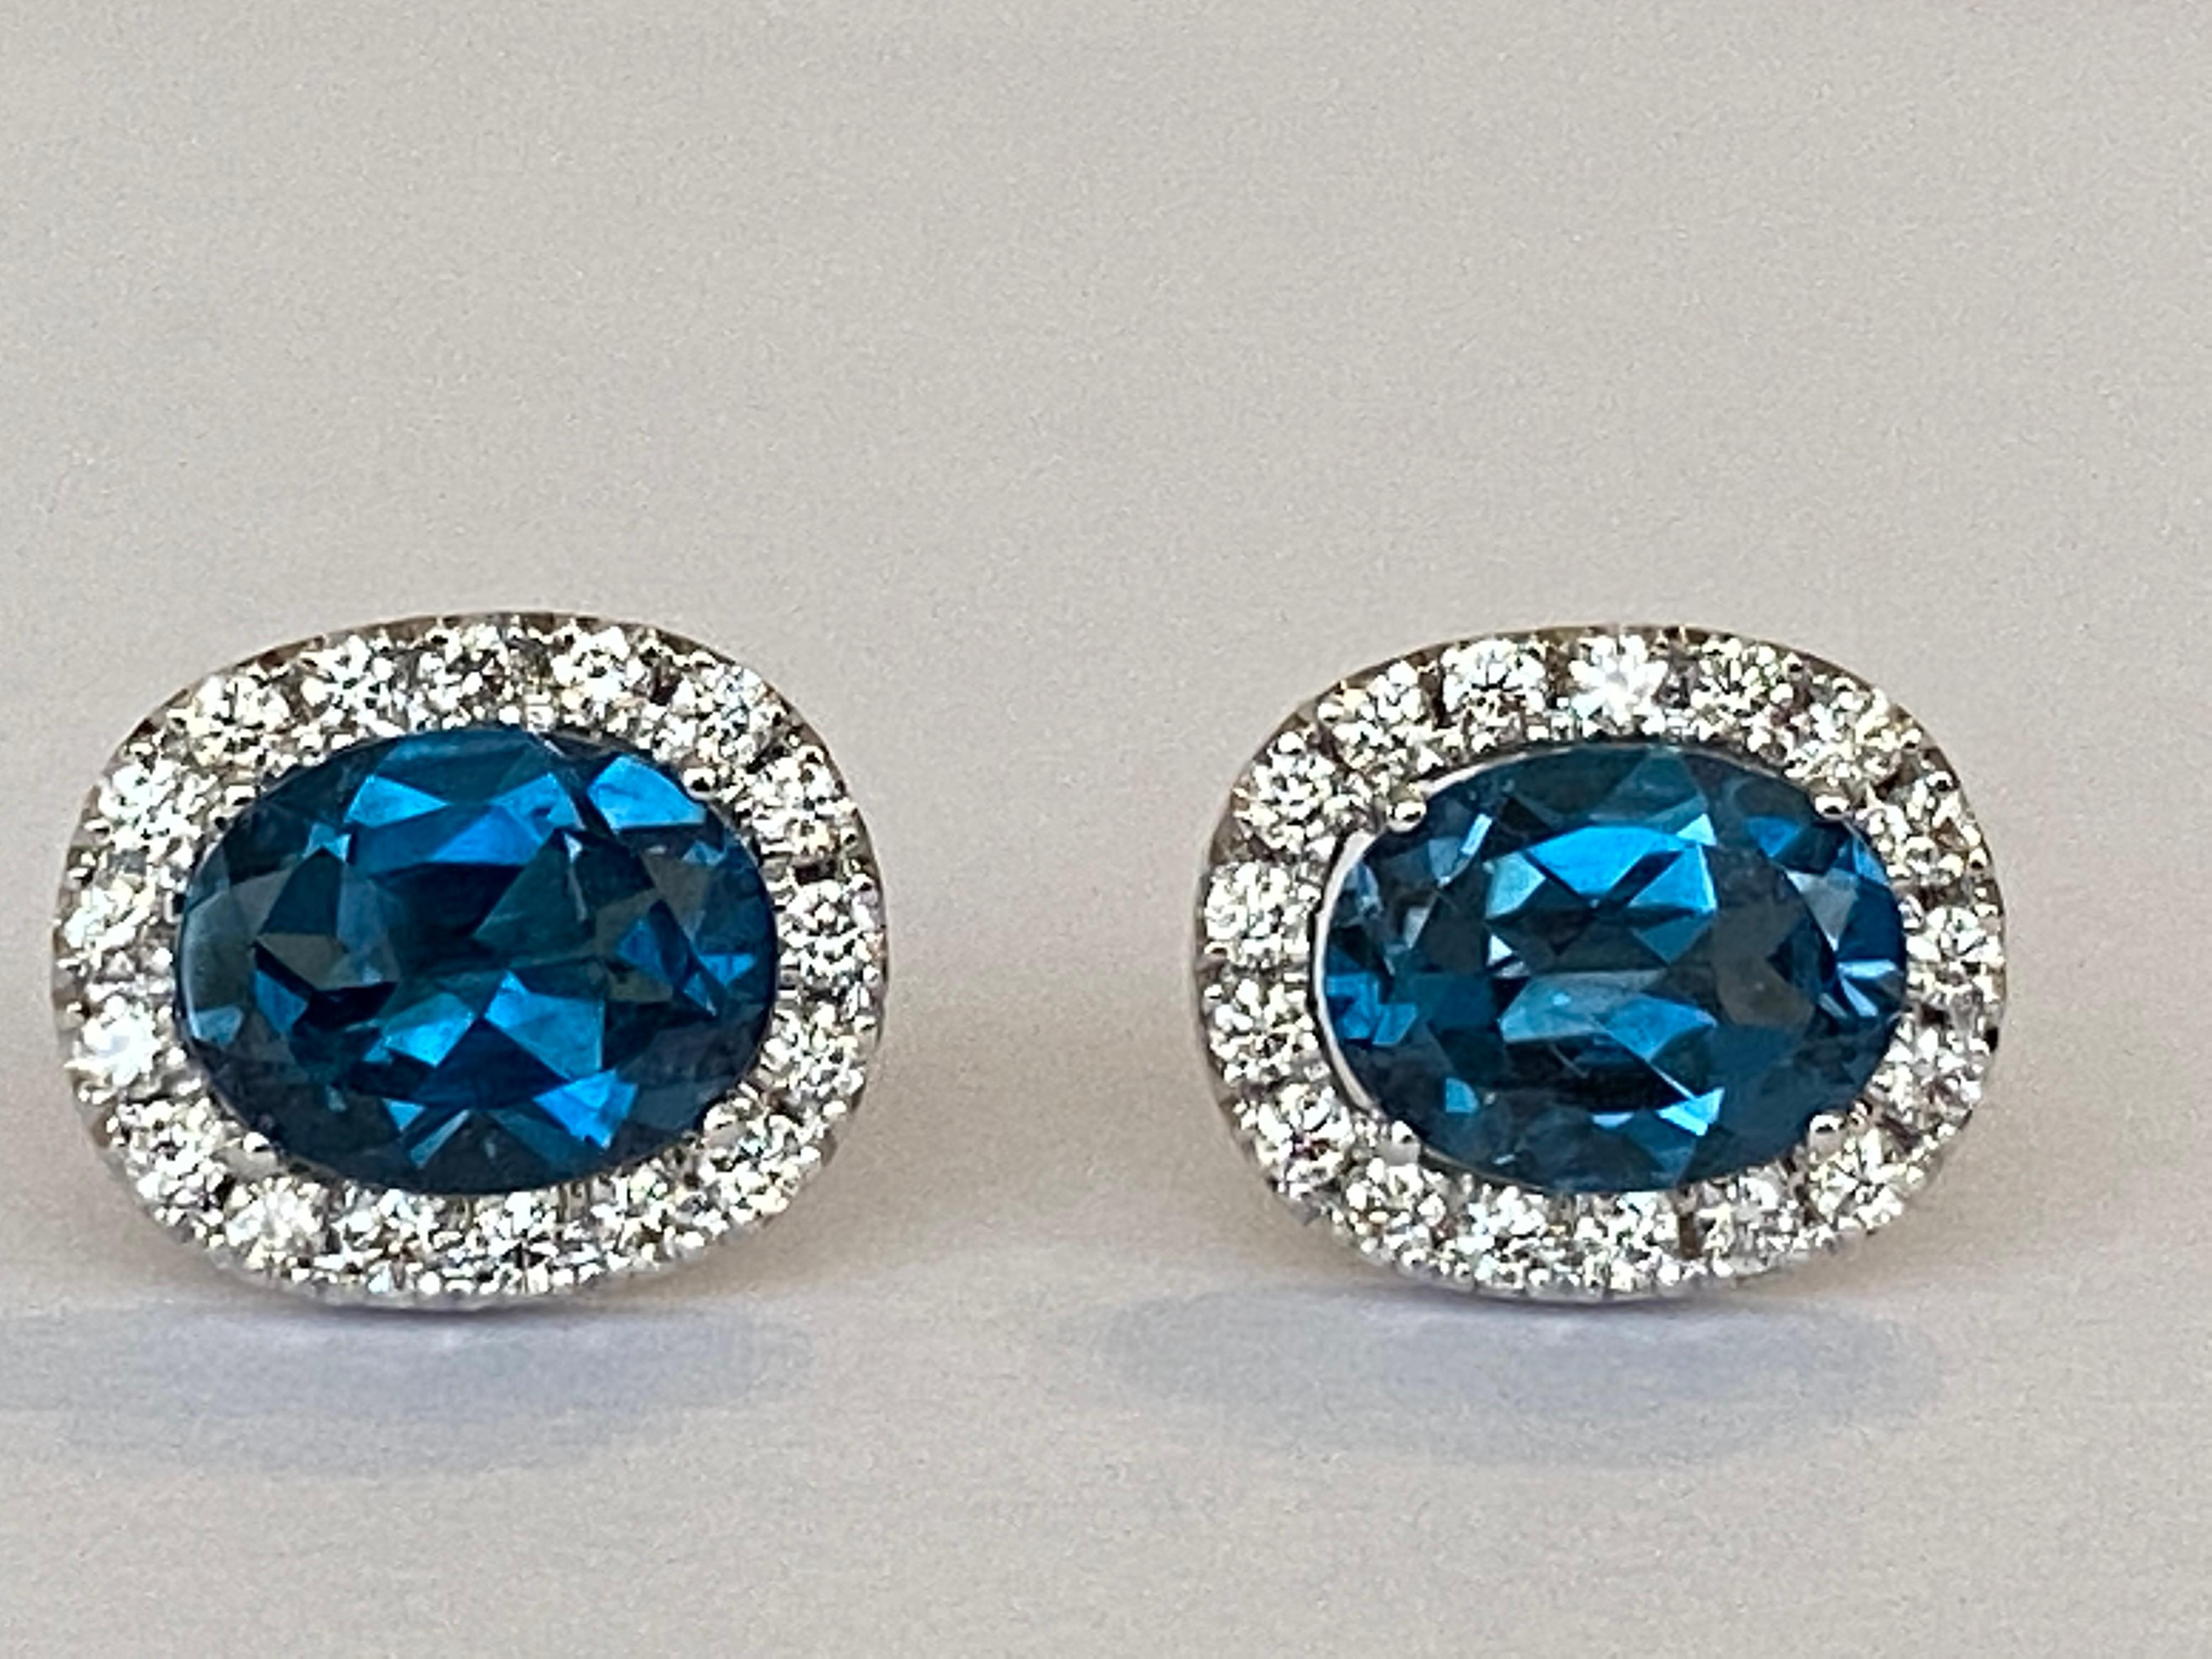 Women's 18 kt white gold Diamond earrings studs with London Blue Topaz For Sale